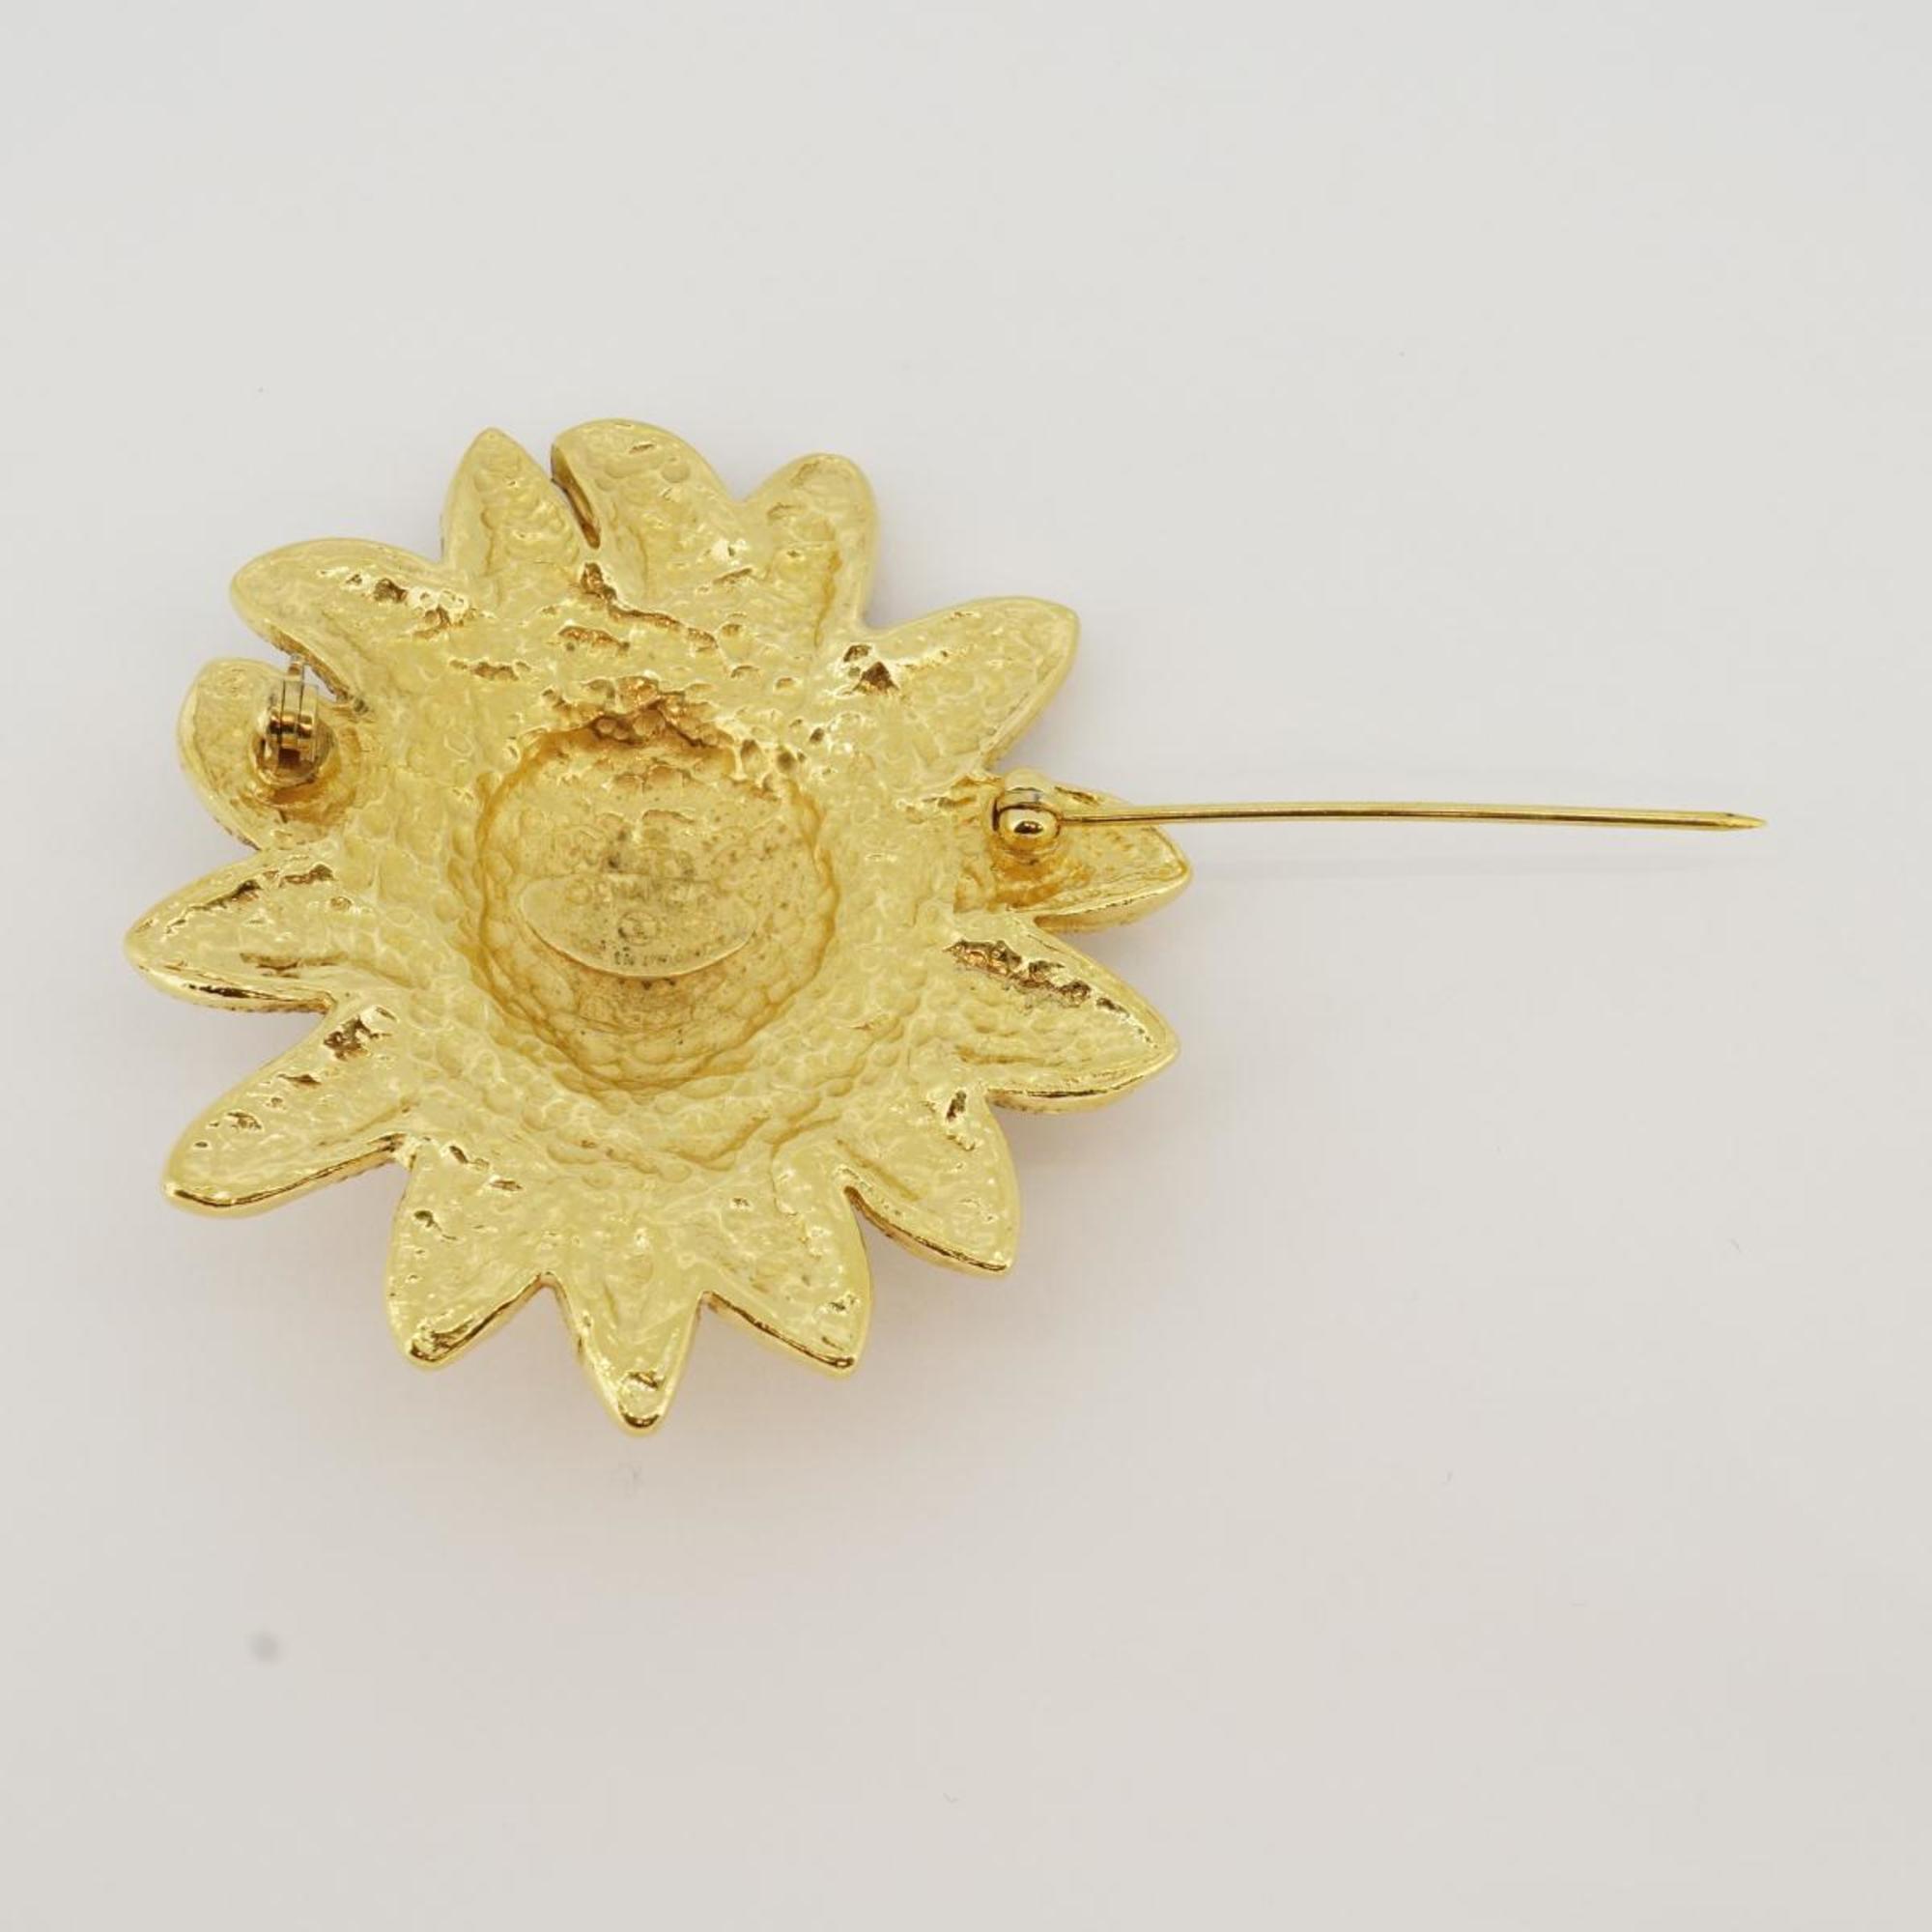 Chanel brooch lion motif GP plated gold men's women's